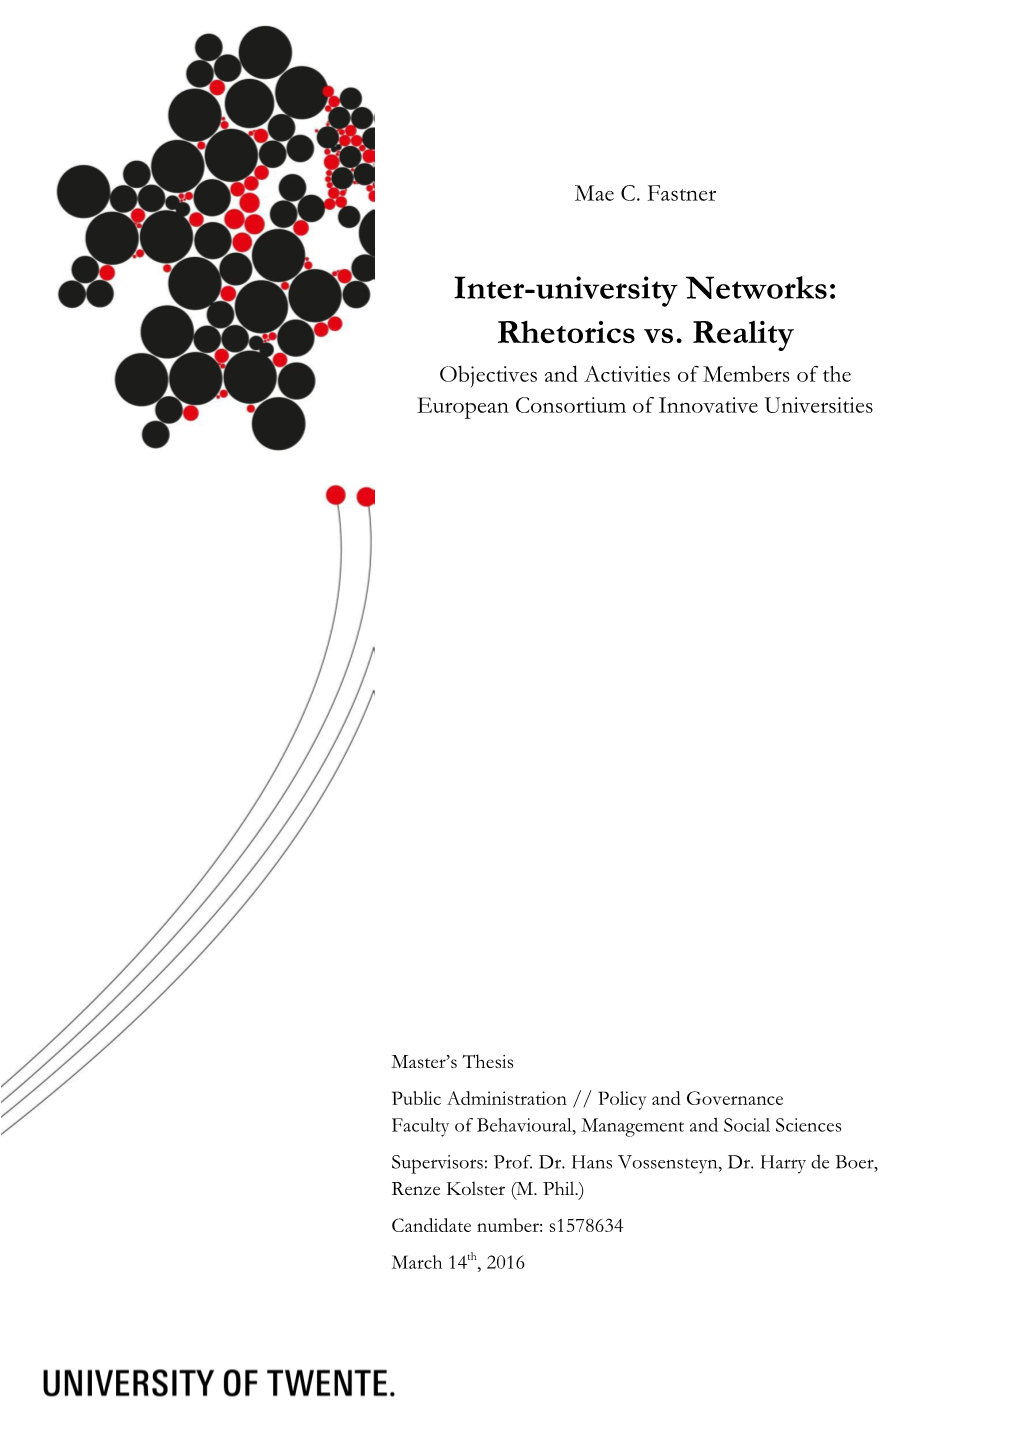 Inter-University Networks: Rhetorics Vs